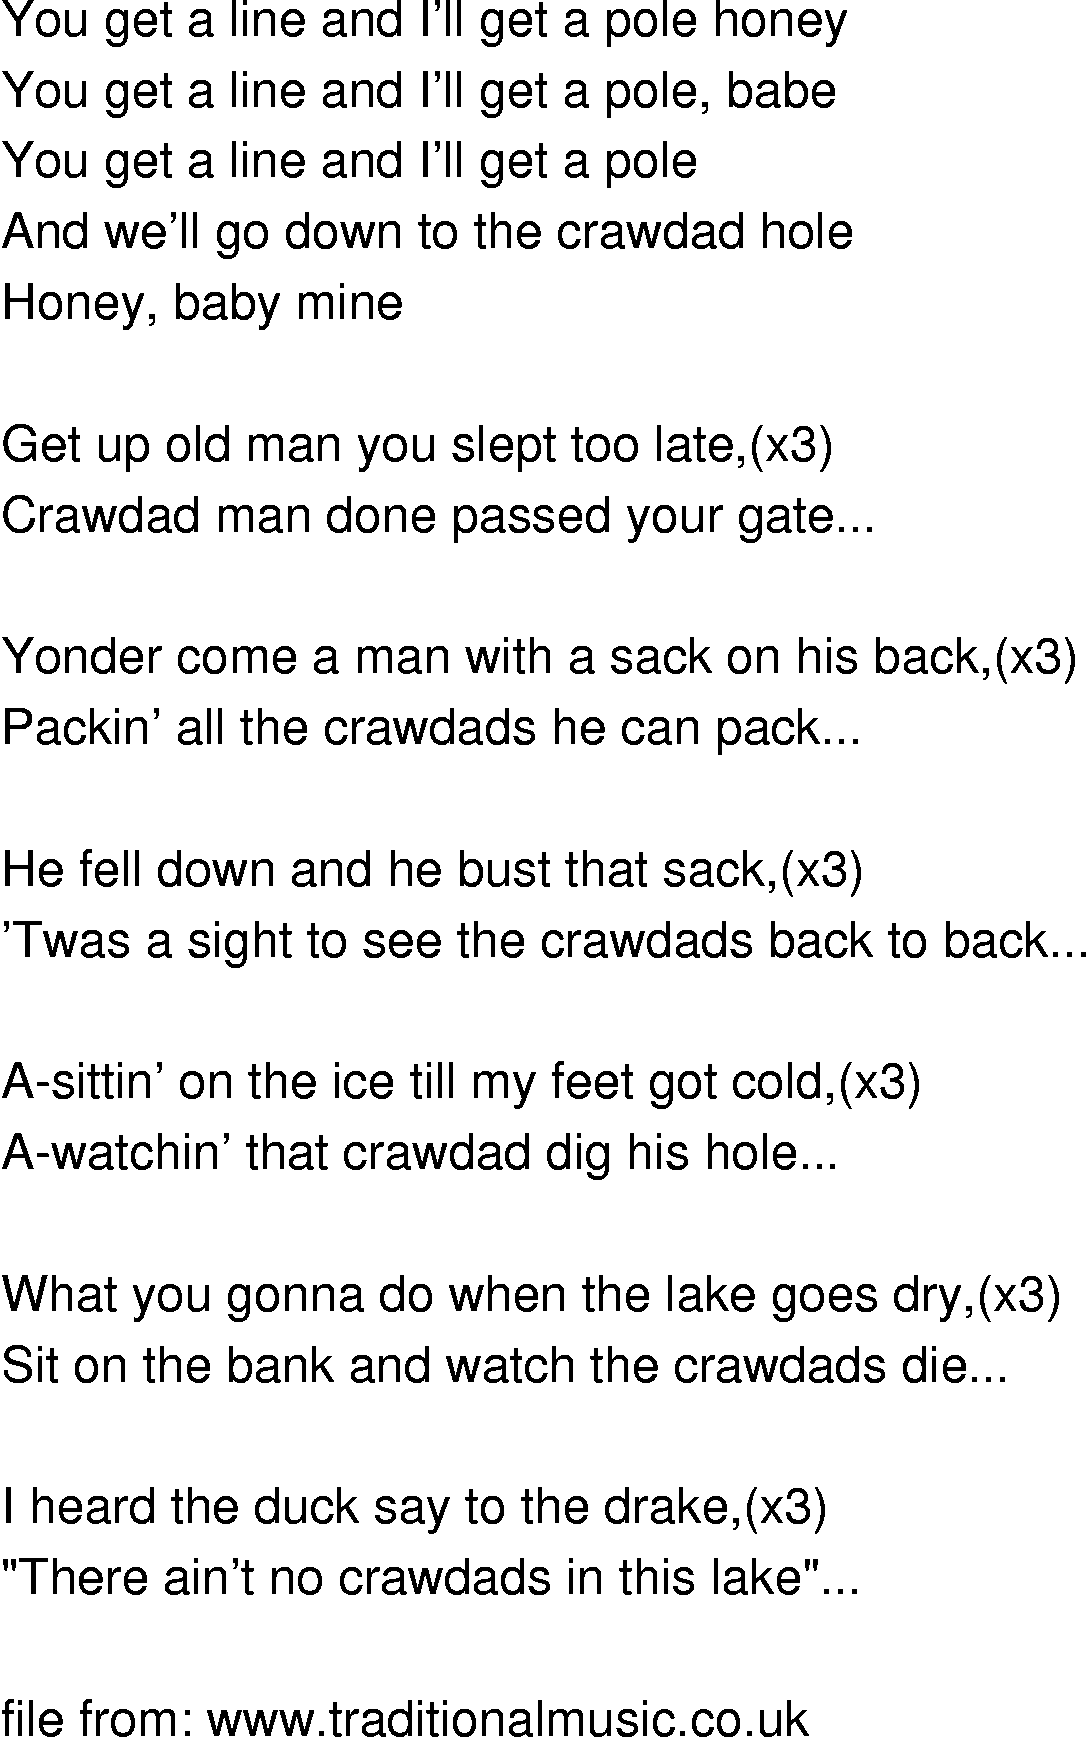 Old-Time (oldtimey) Song Lyrics - crawdad song